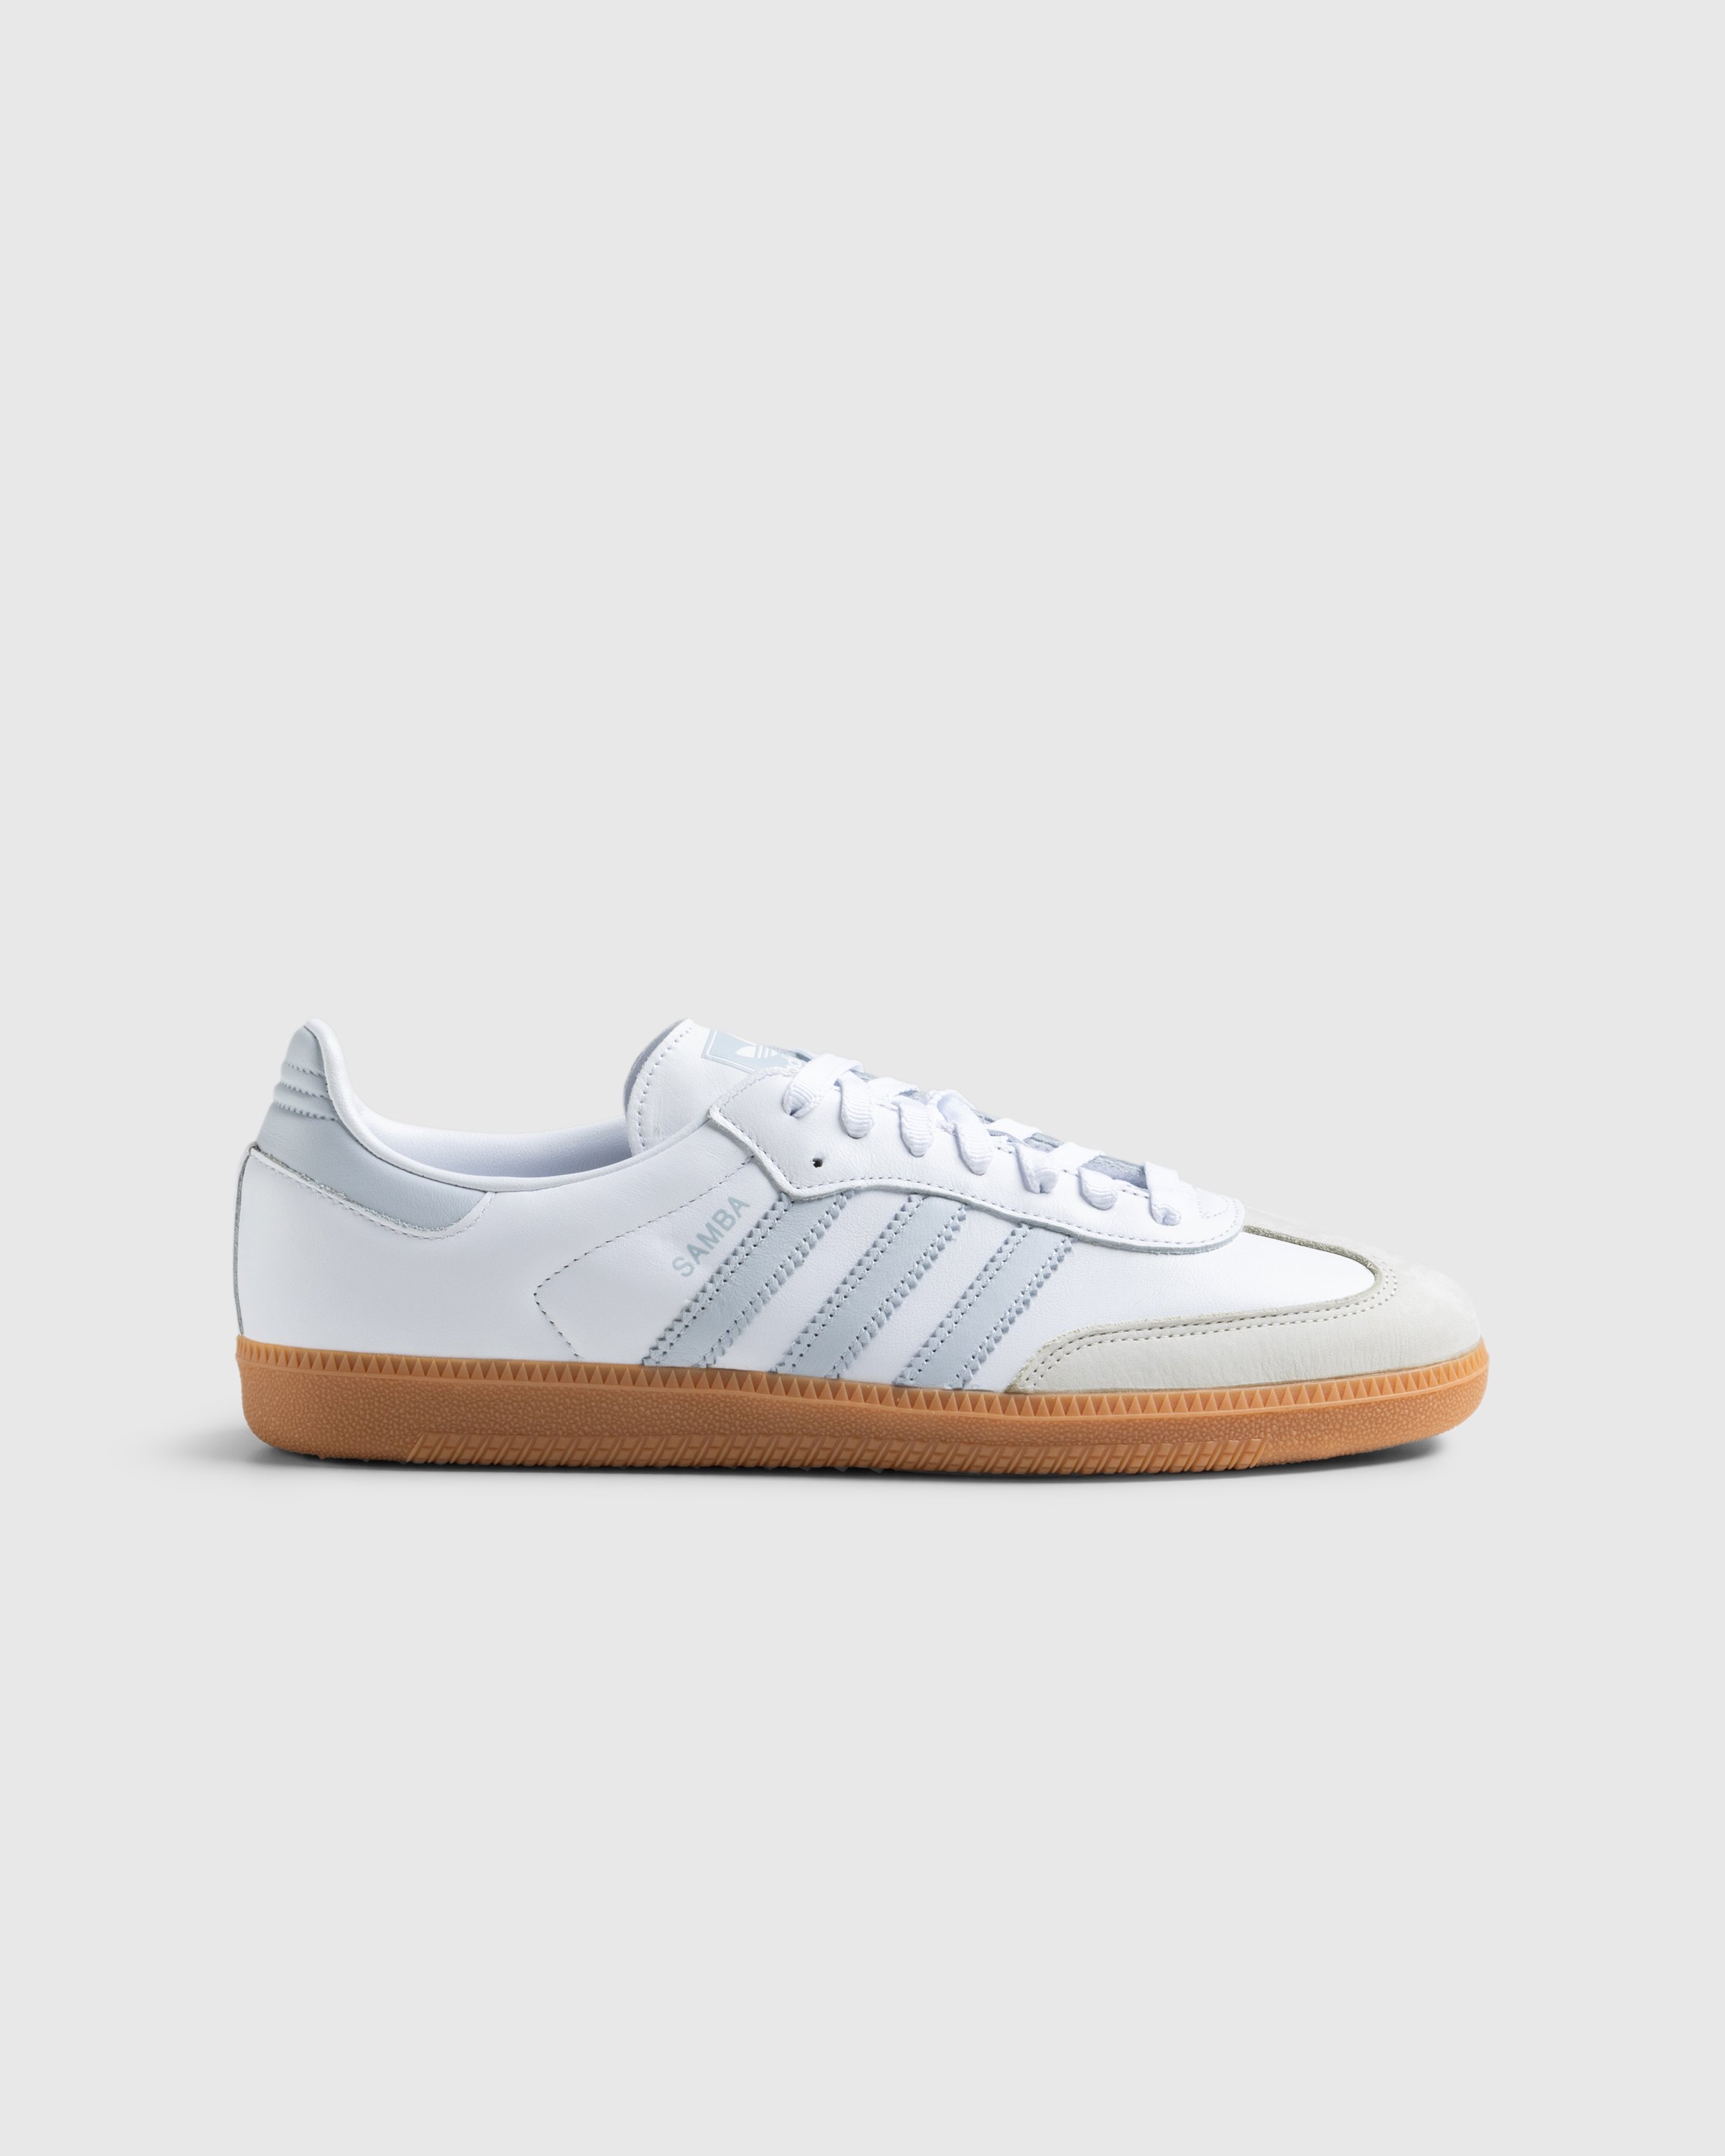 Adidas - Samba Og W          Ftwwht/Halblu/Owhite - Footwear - White - Image 1